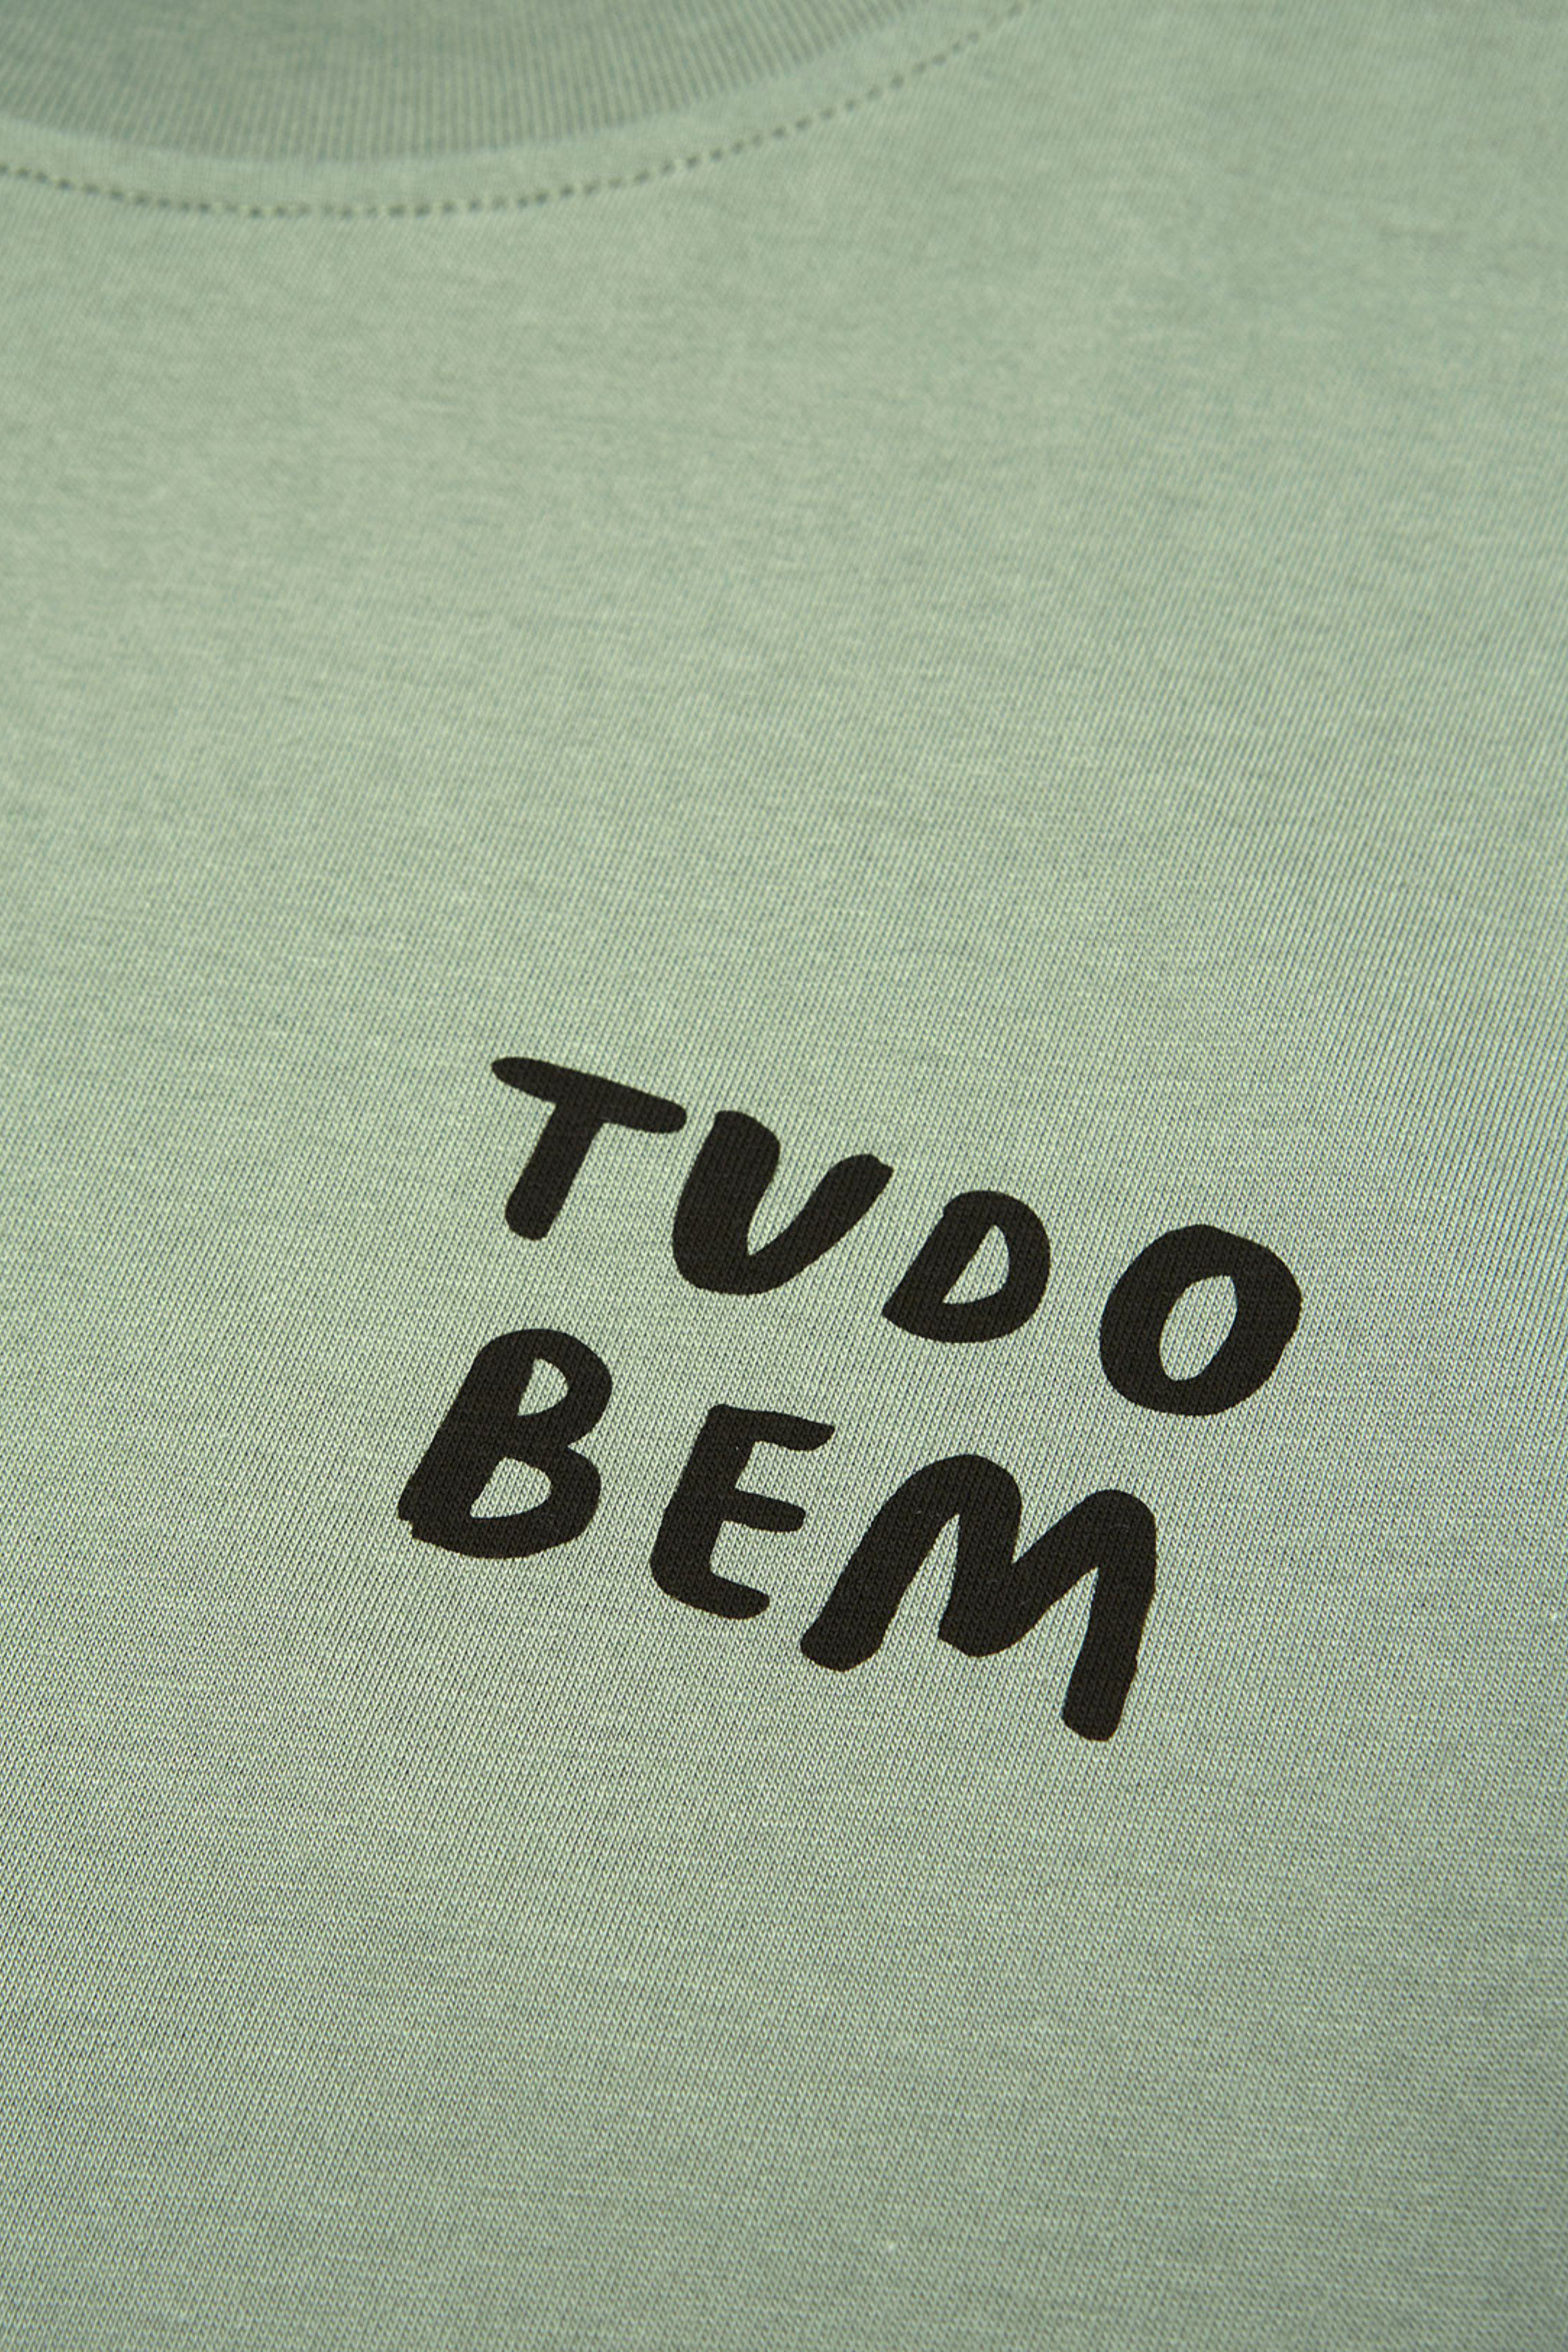 TUDO BEM TEE SHIRT - GREEN SAGE